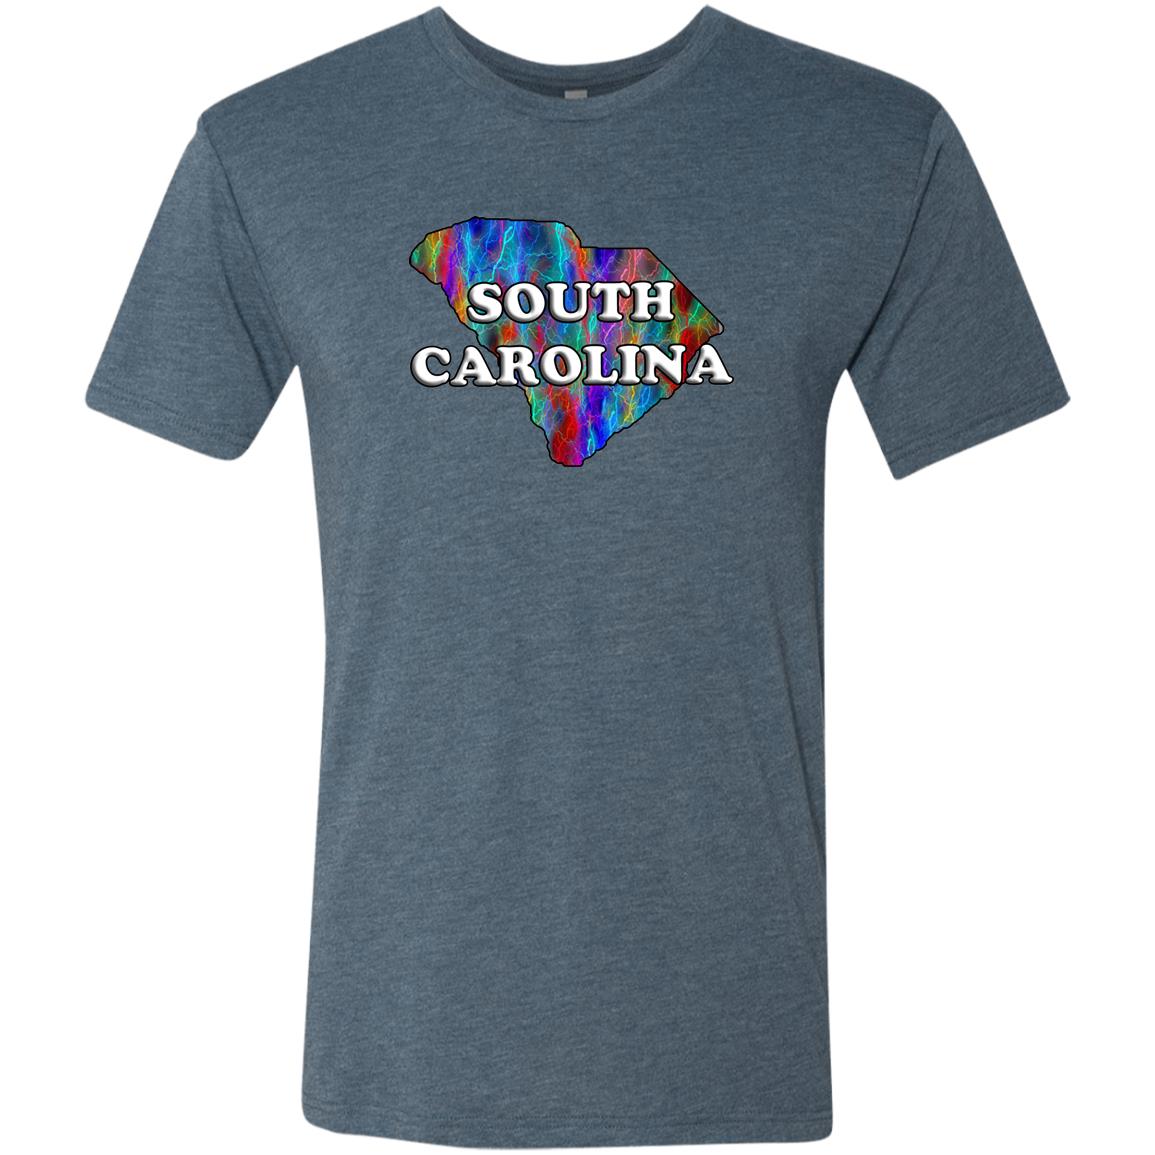 South Carolina State T-Shirt